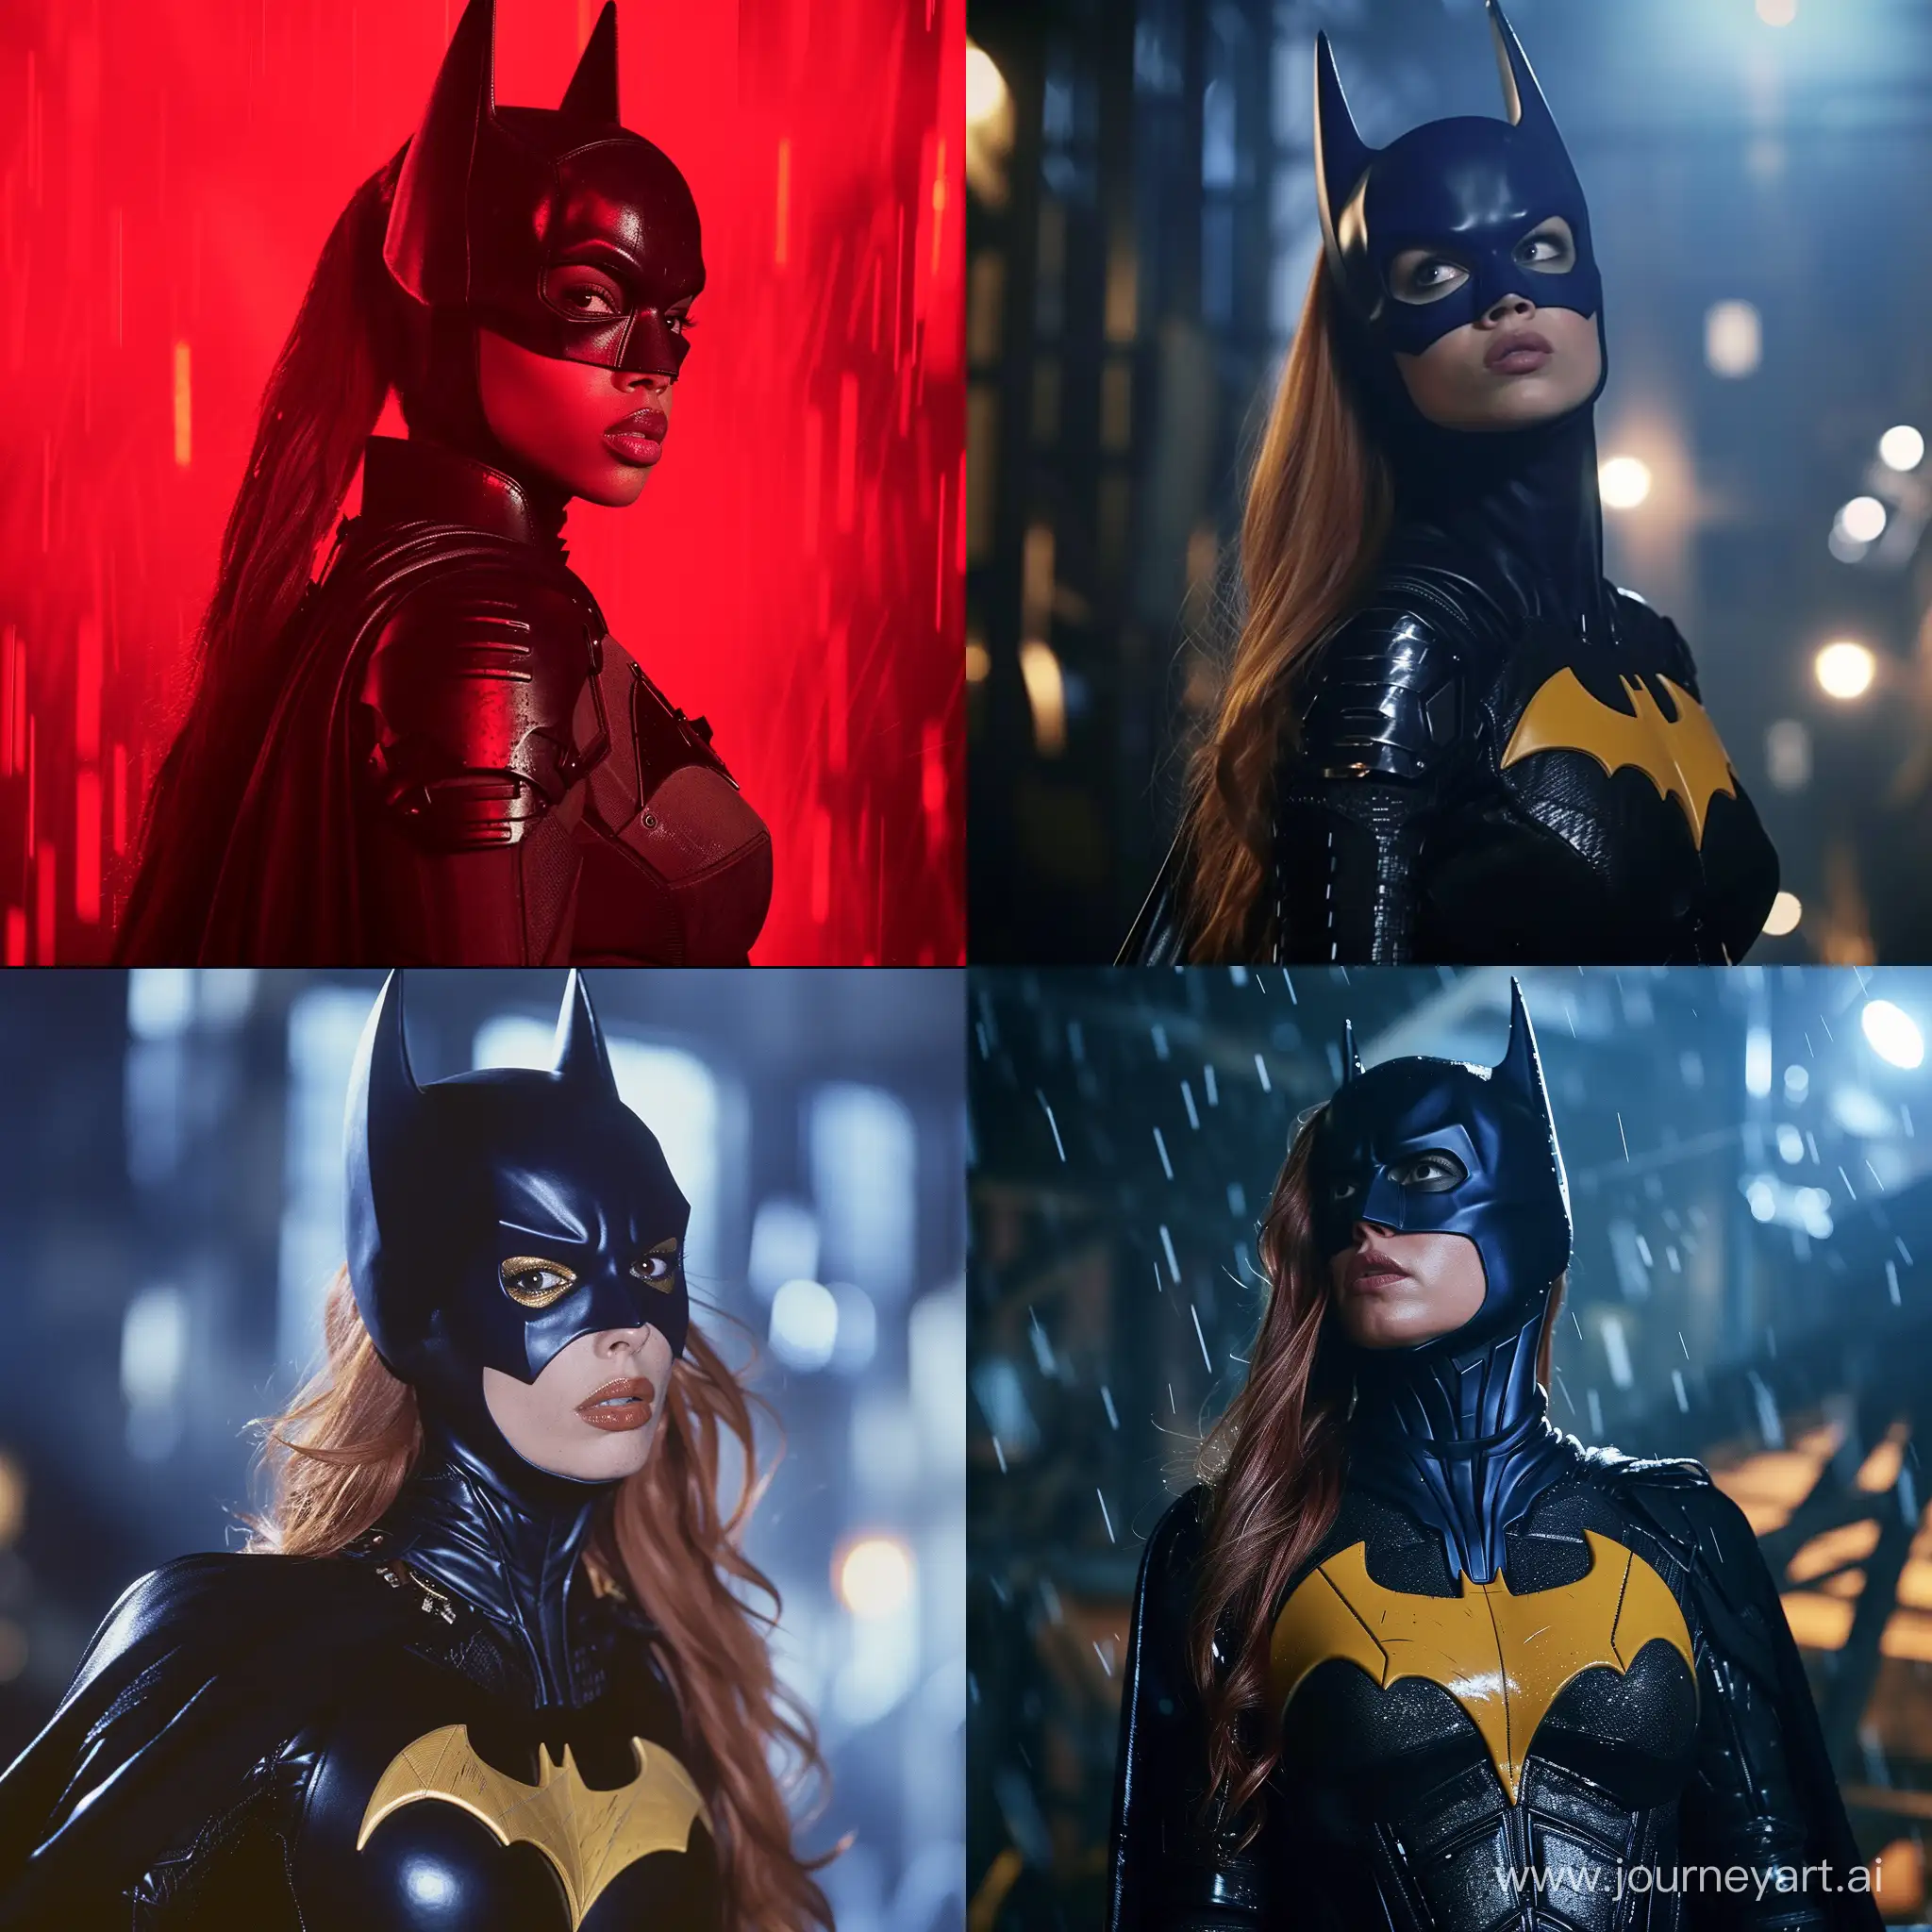 Erica-Ash-Portrays-Batgirl-in-Cinematic-Still